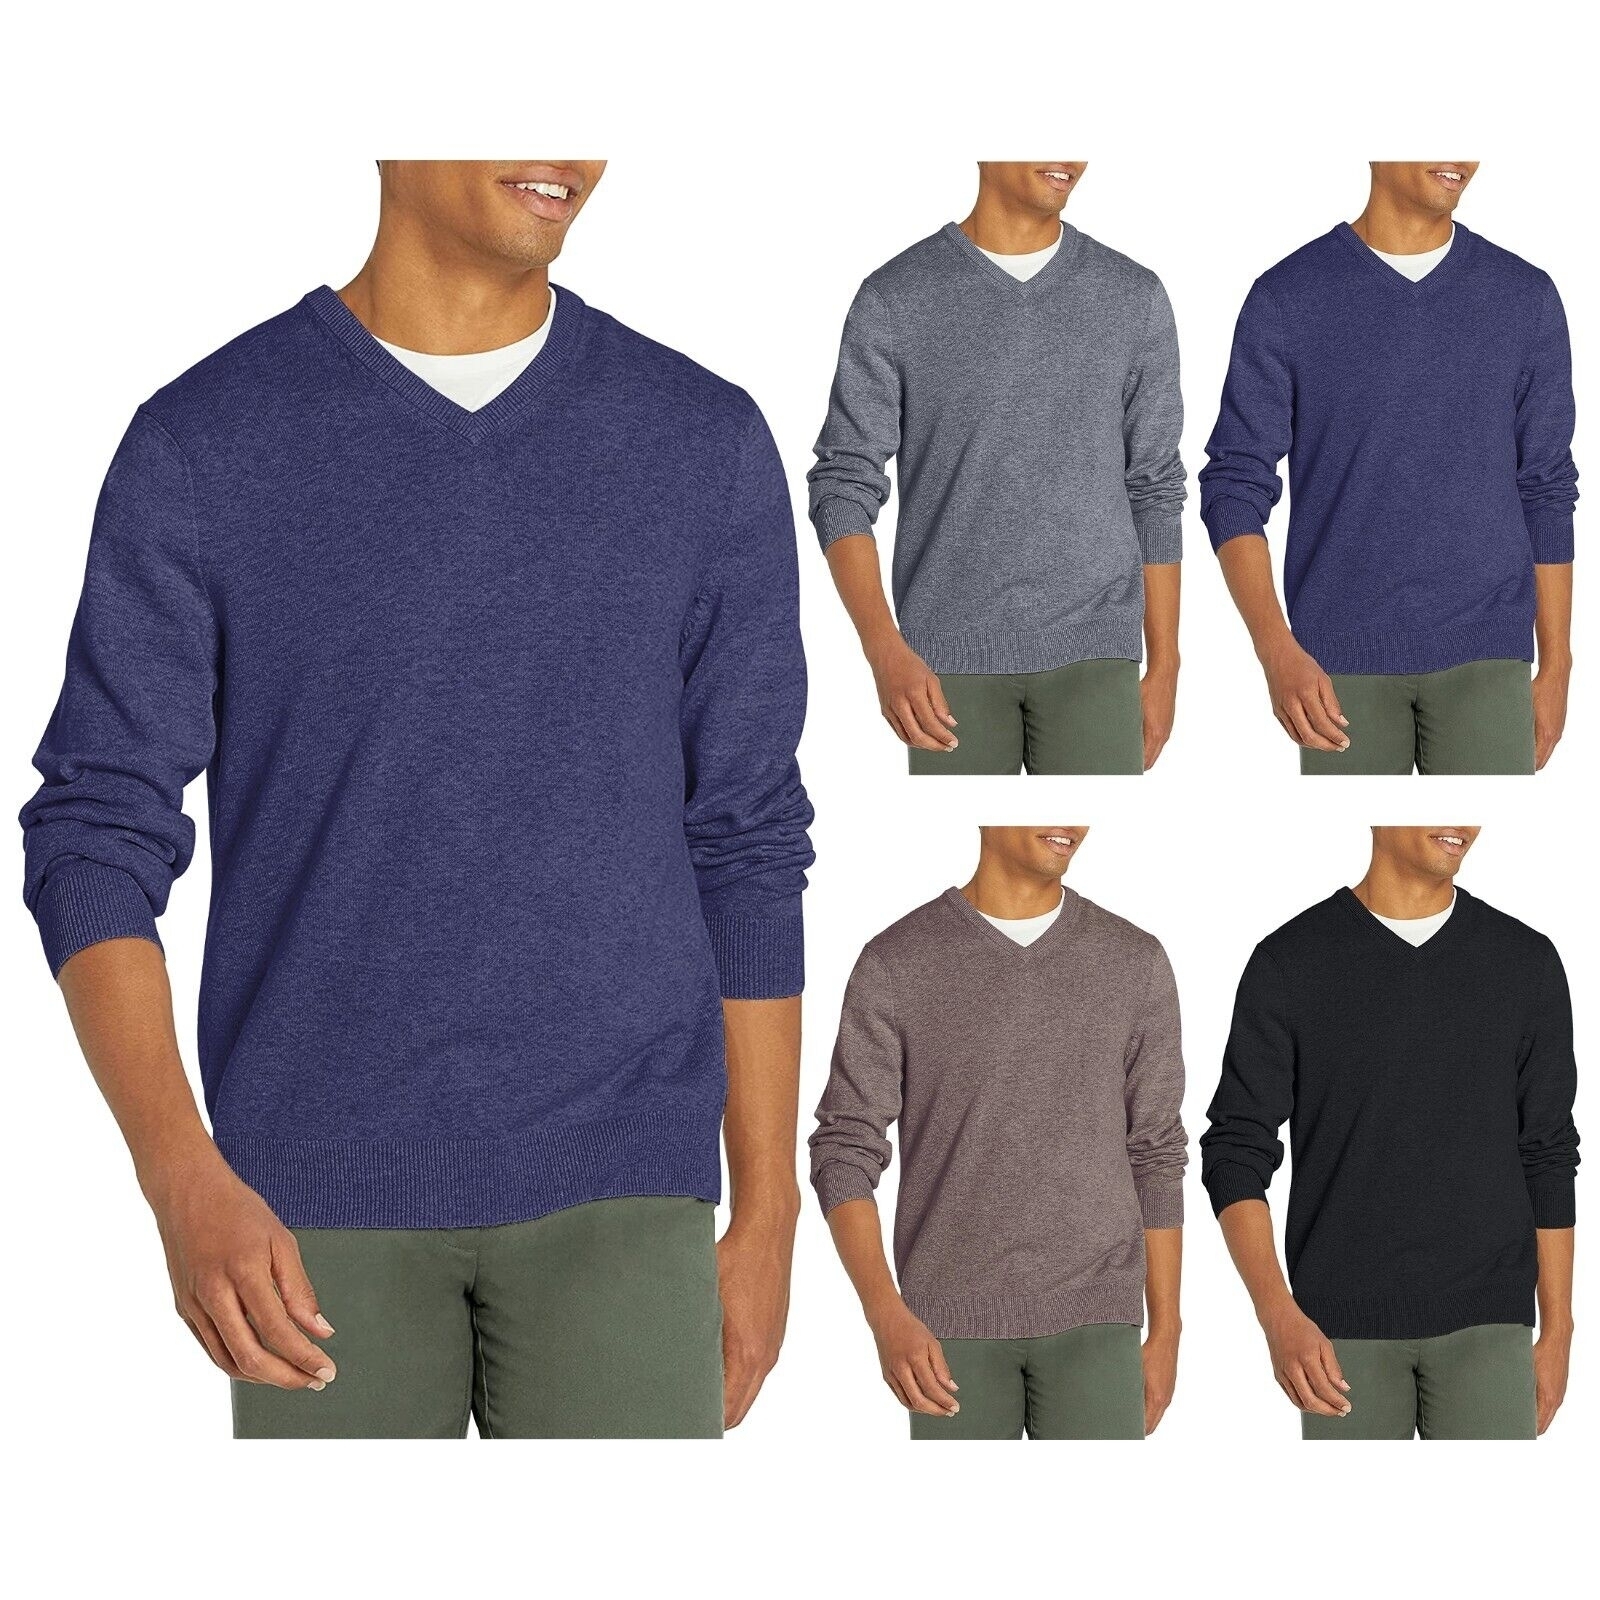 3-Pack Men's Casual Cozy Ultra Soft Slim Fit Warm Knit Pullover V-Neck Sweater - Medium